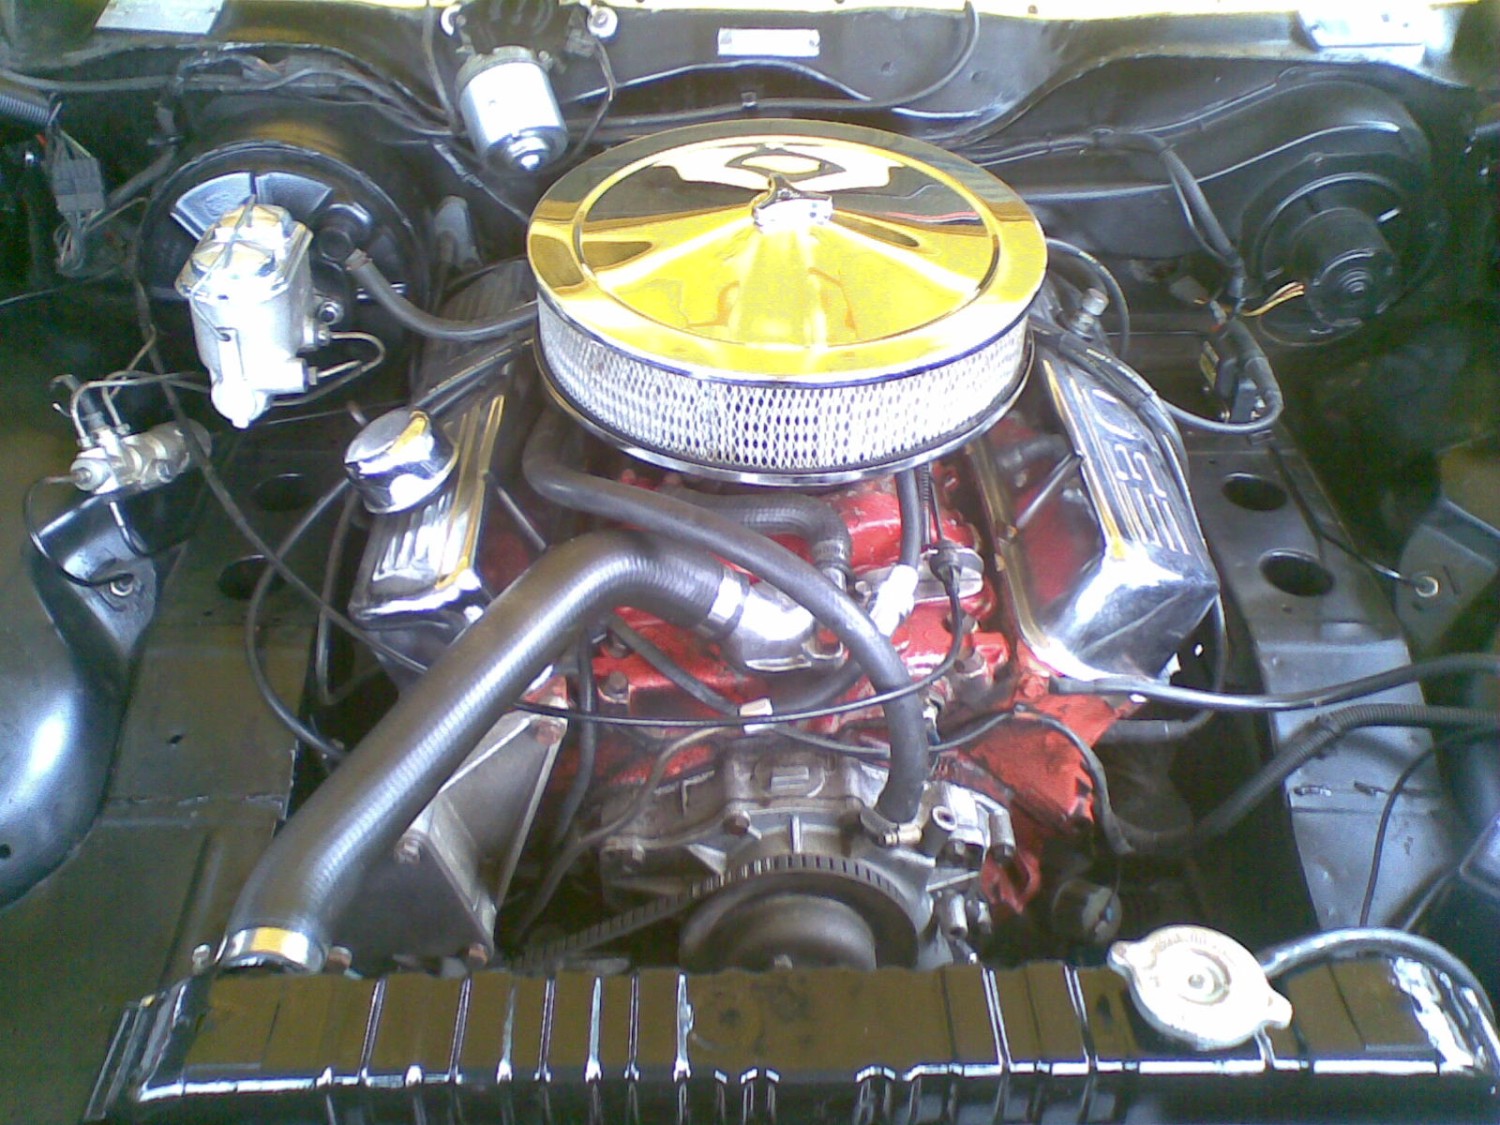 1974 Holden Torana SLR5000